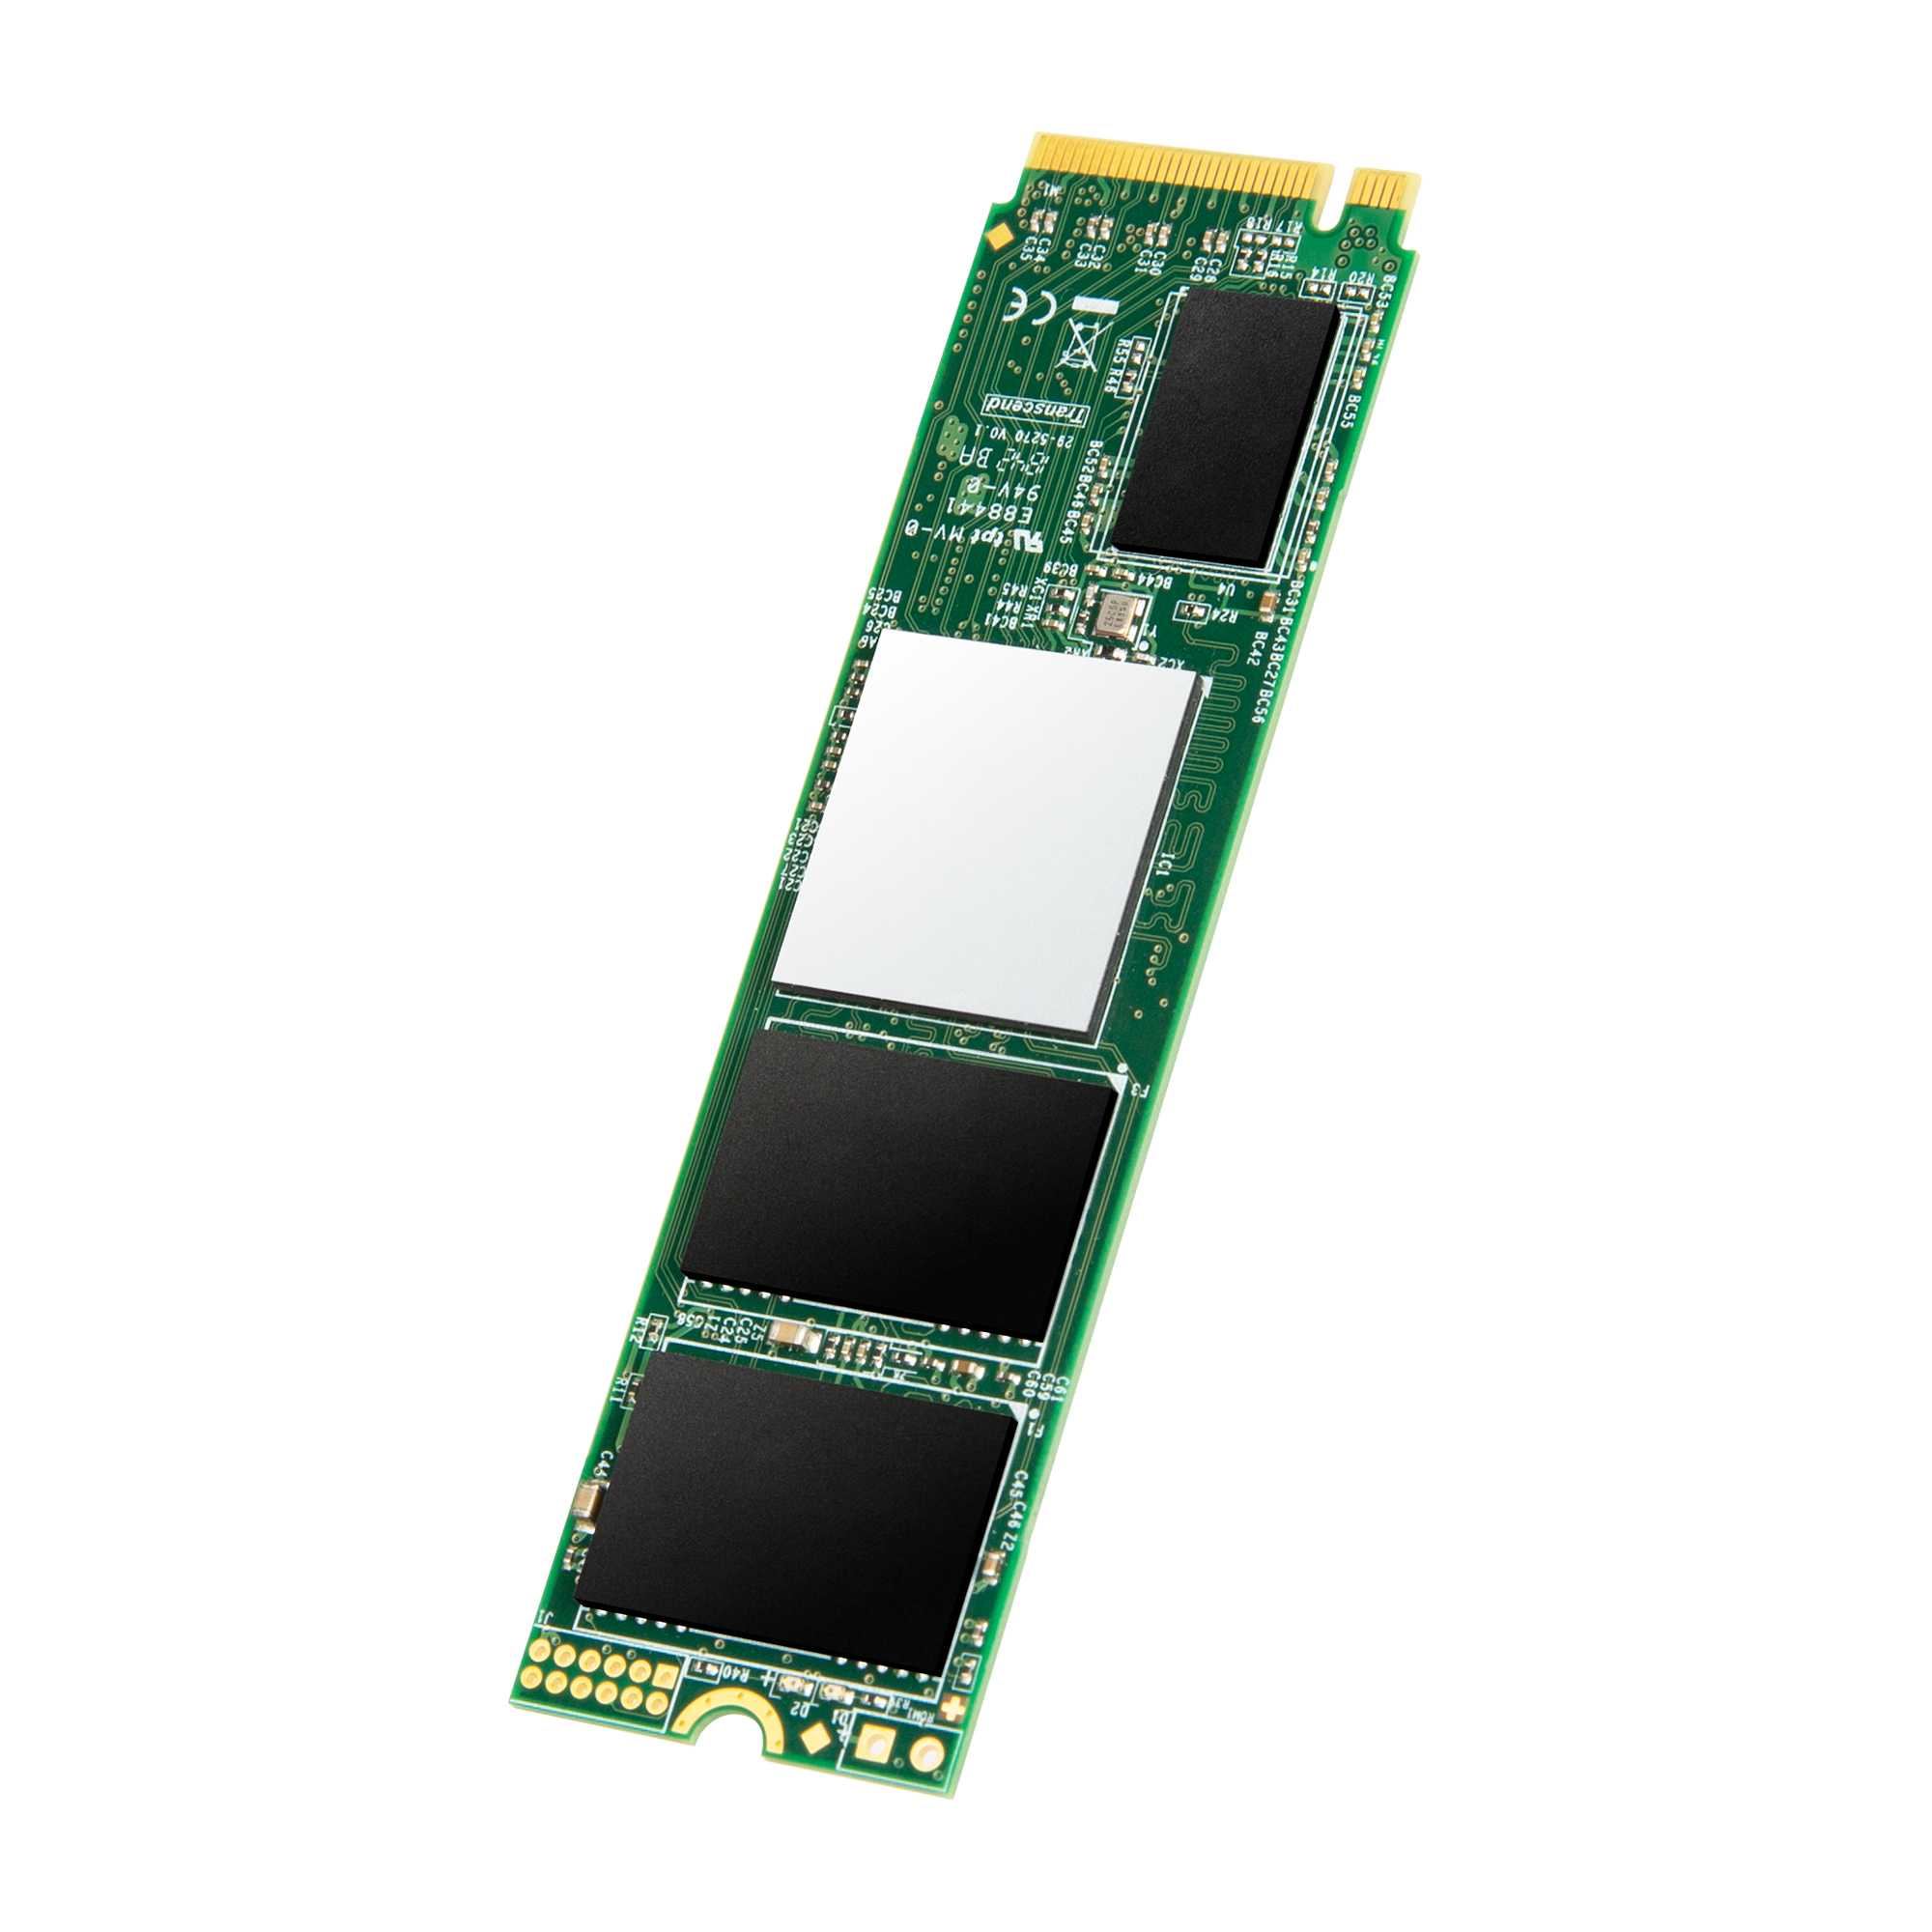 PCIe M.2 SSDs